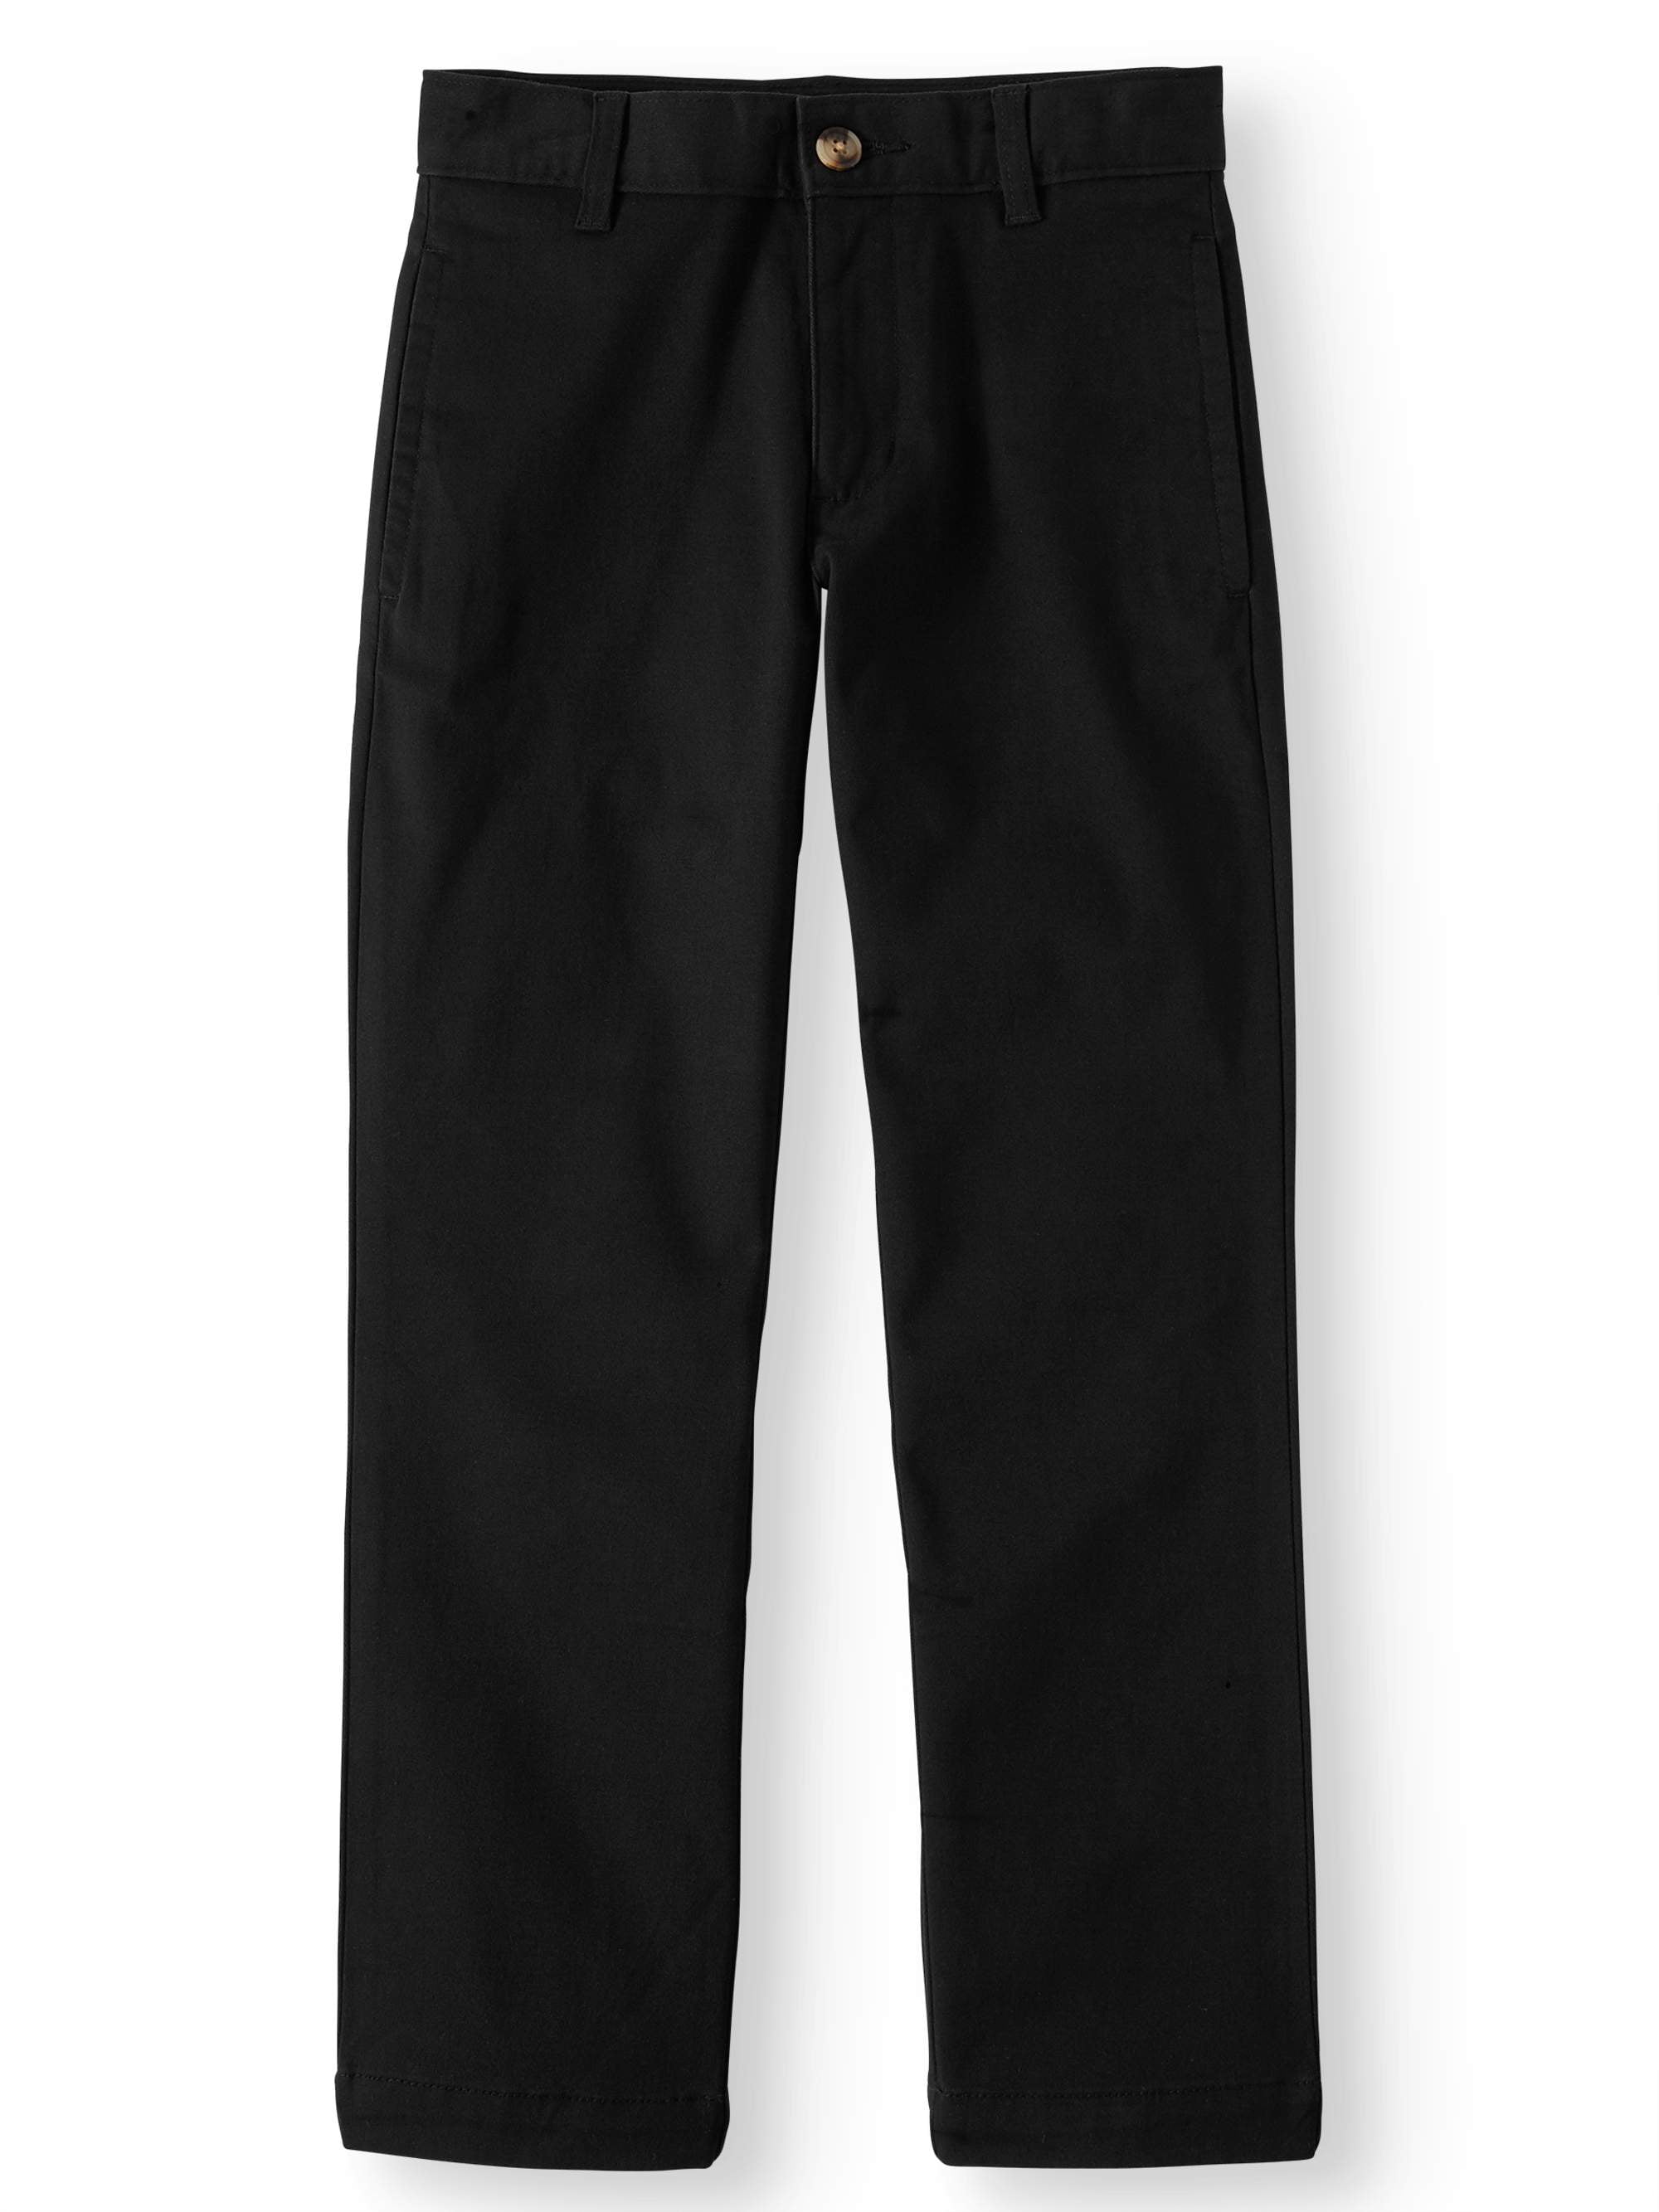 TVT Pleated Pocket Loose Fit Boys Black School Trousers Uniform NEW Pants 